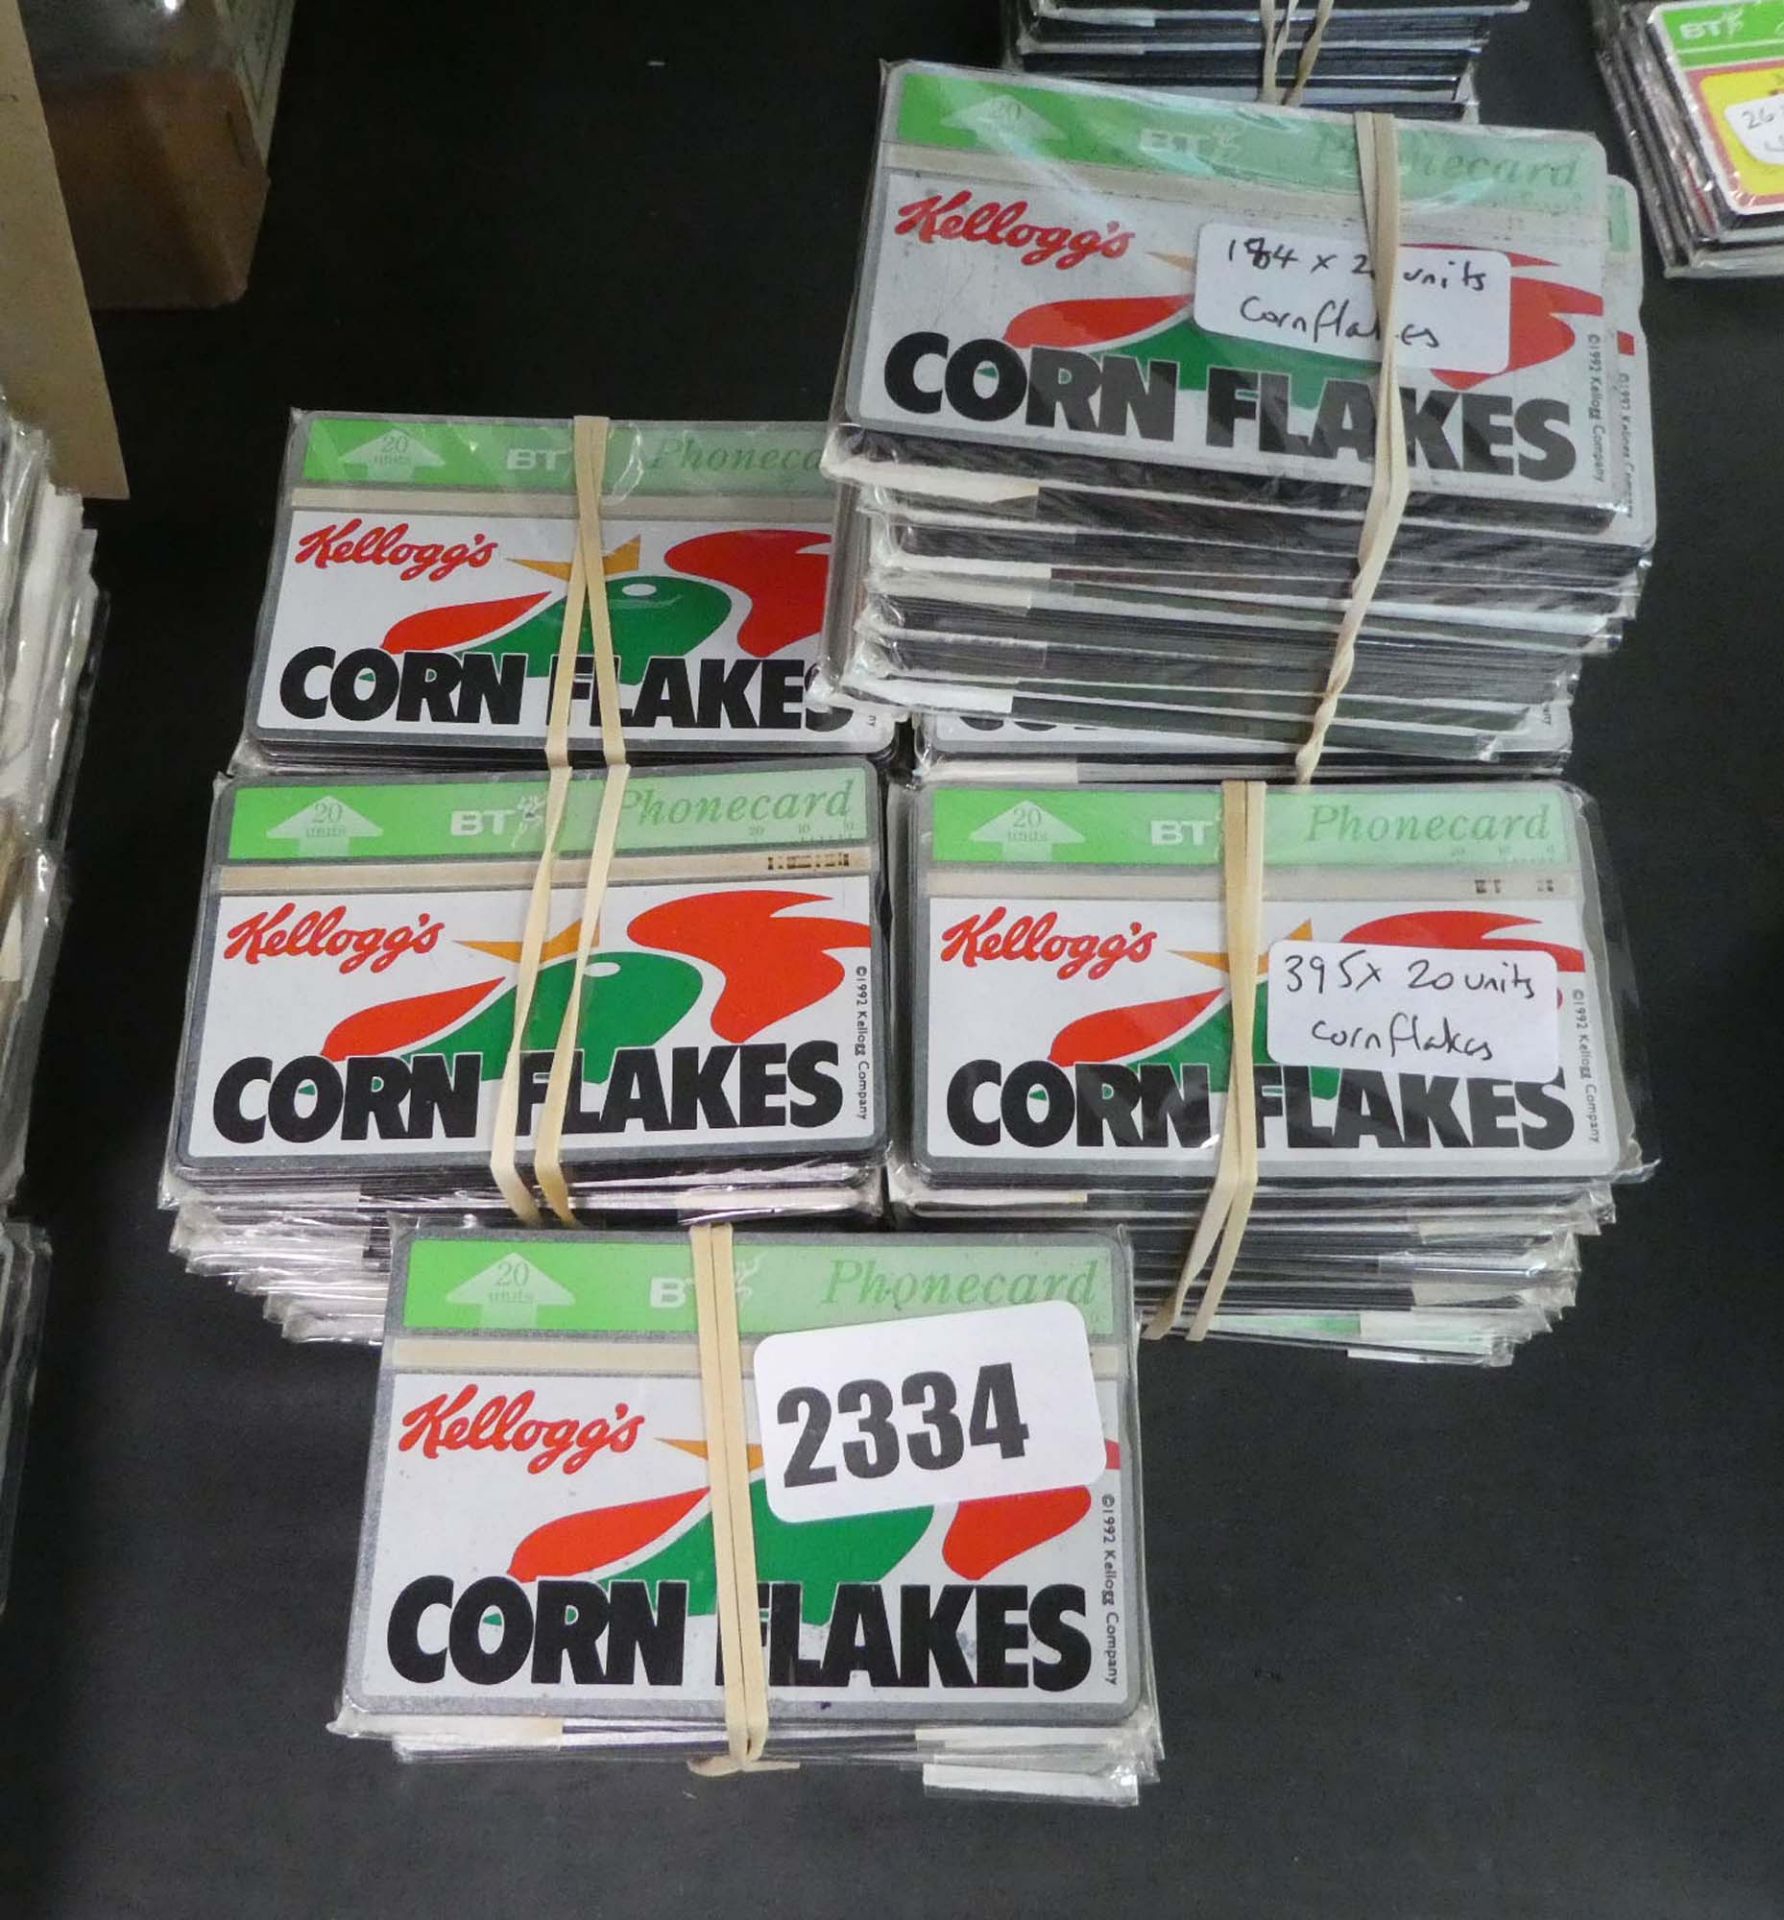 BT unused phone cards incl. Kellogs Cornflakes branding, 1992